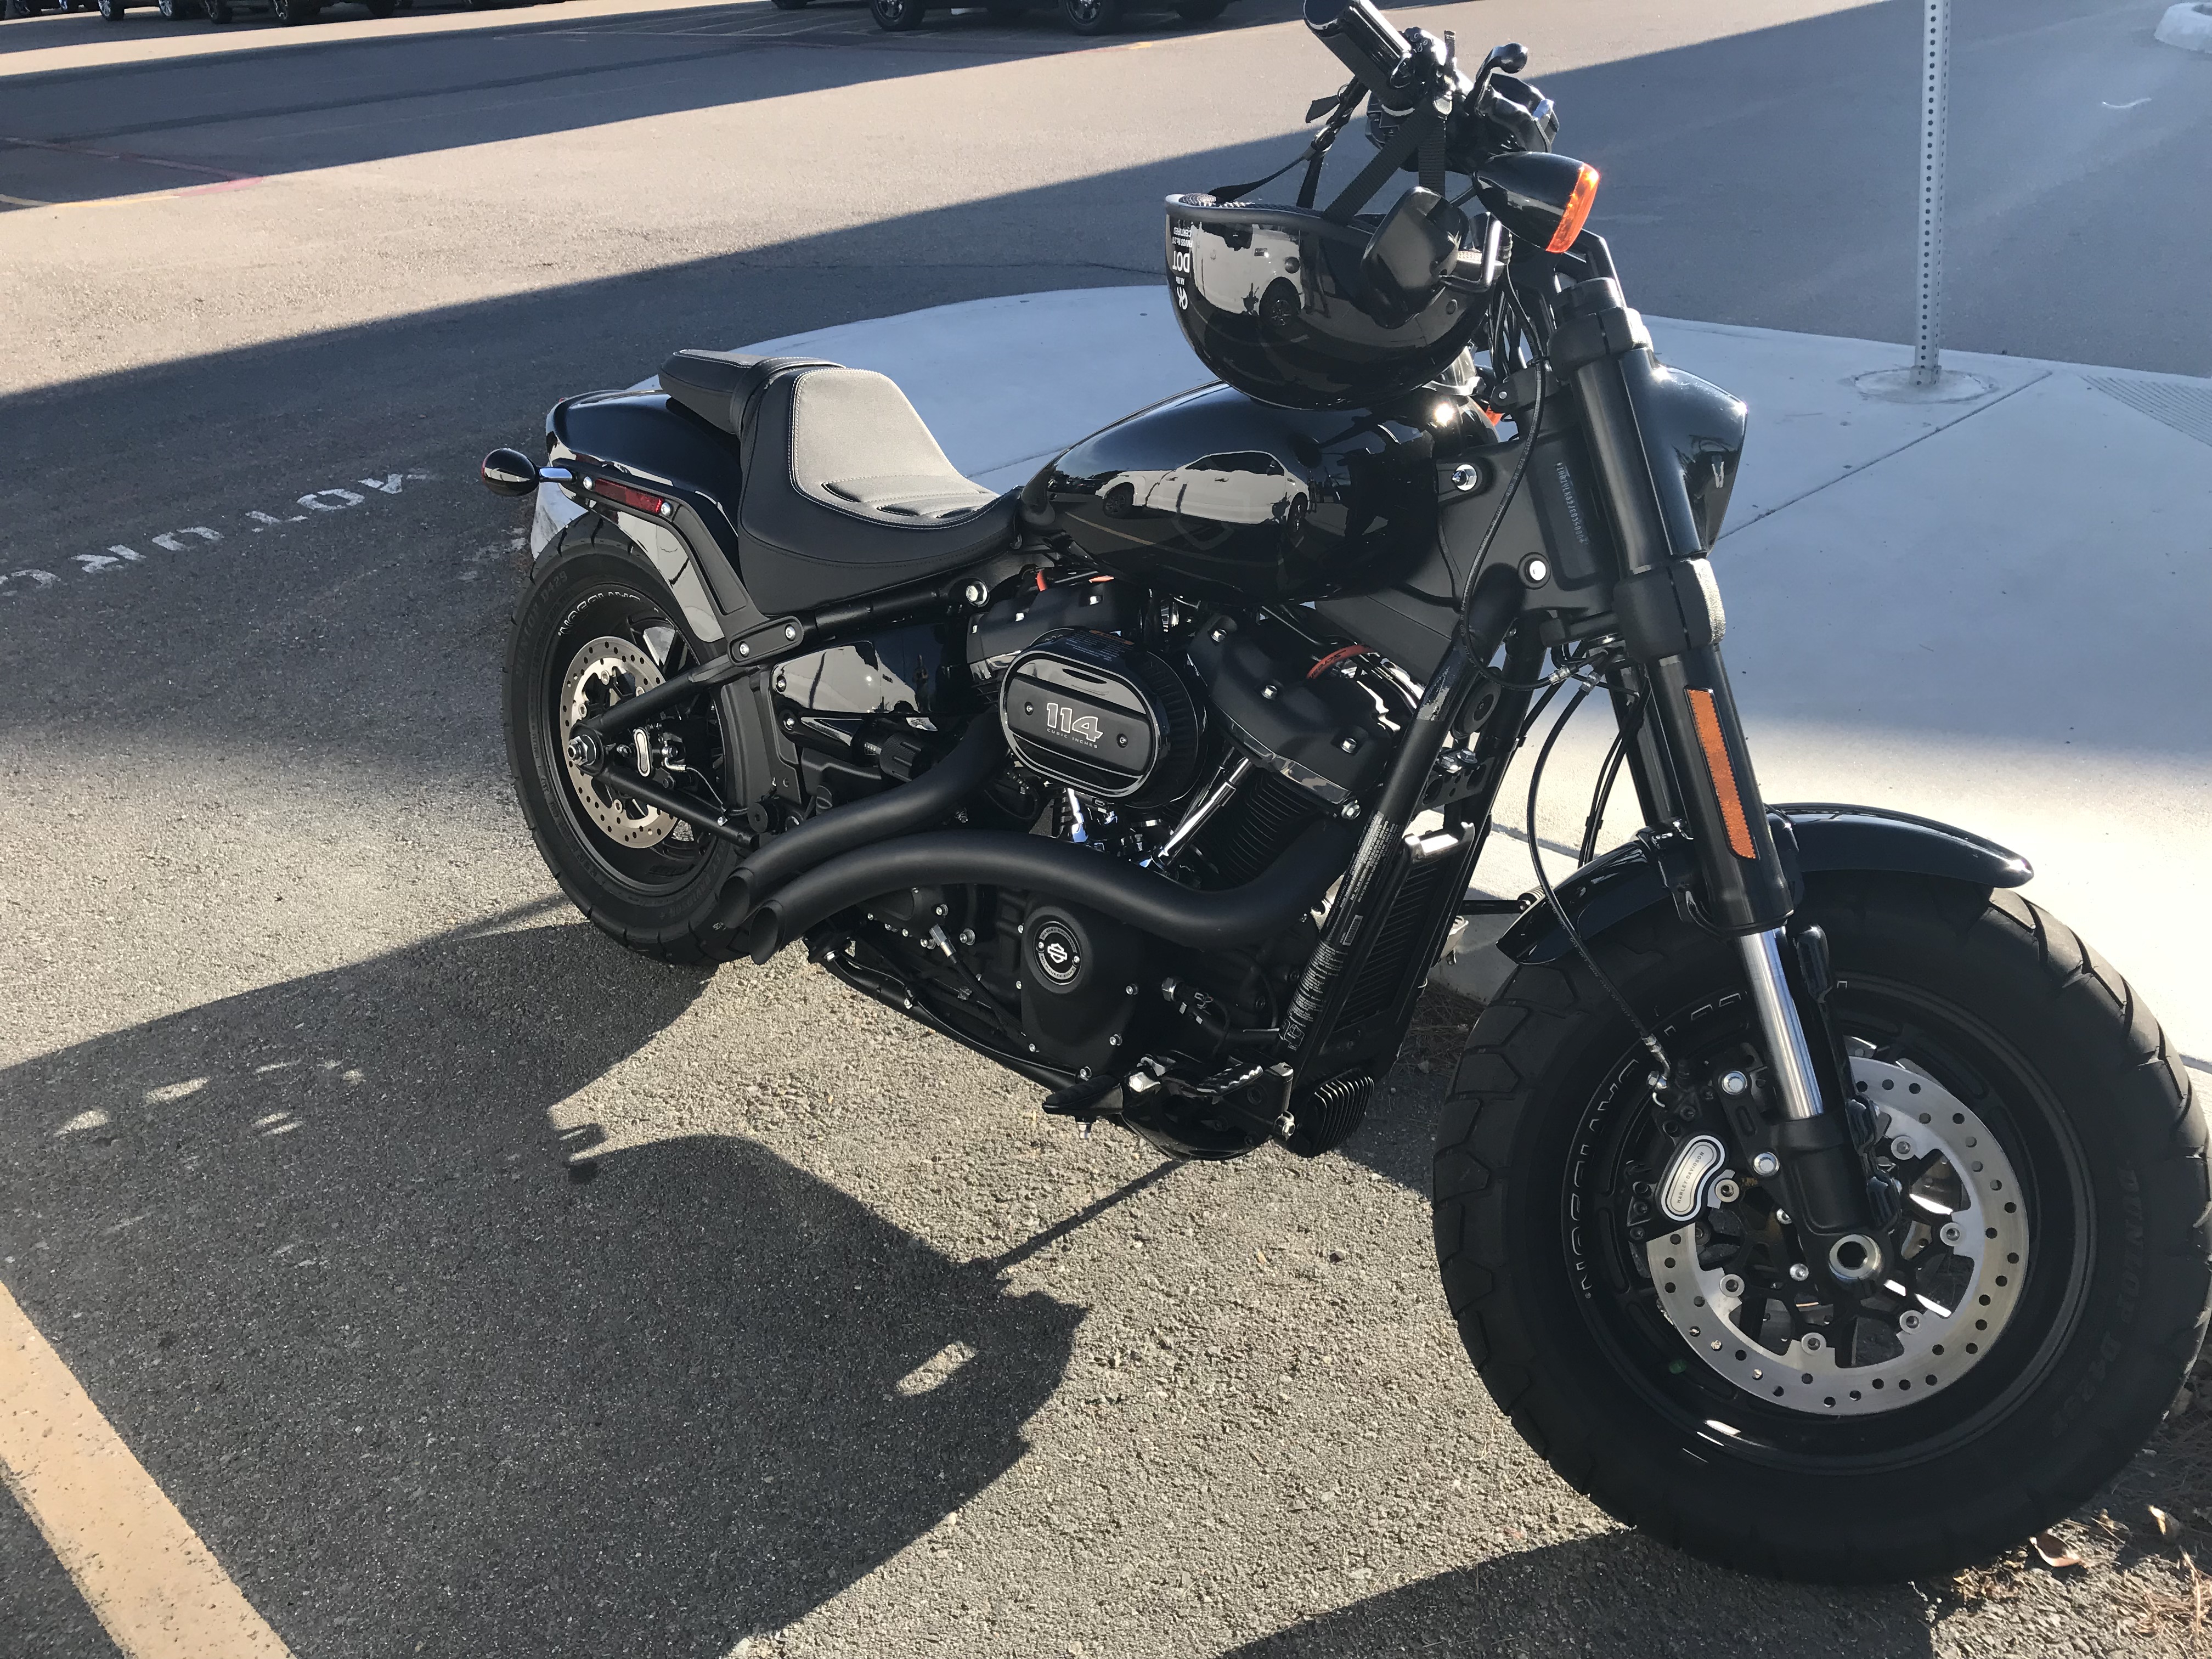 2018 Fat Bob Exhaust Harley Davidson Forums